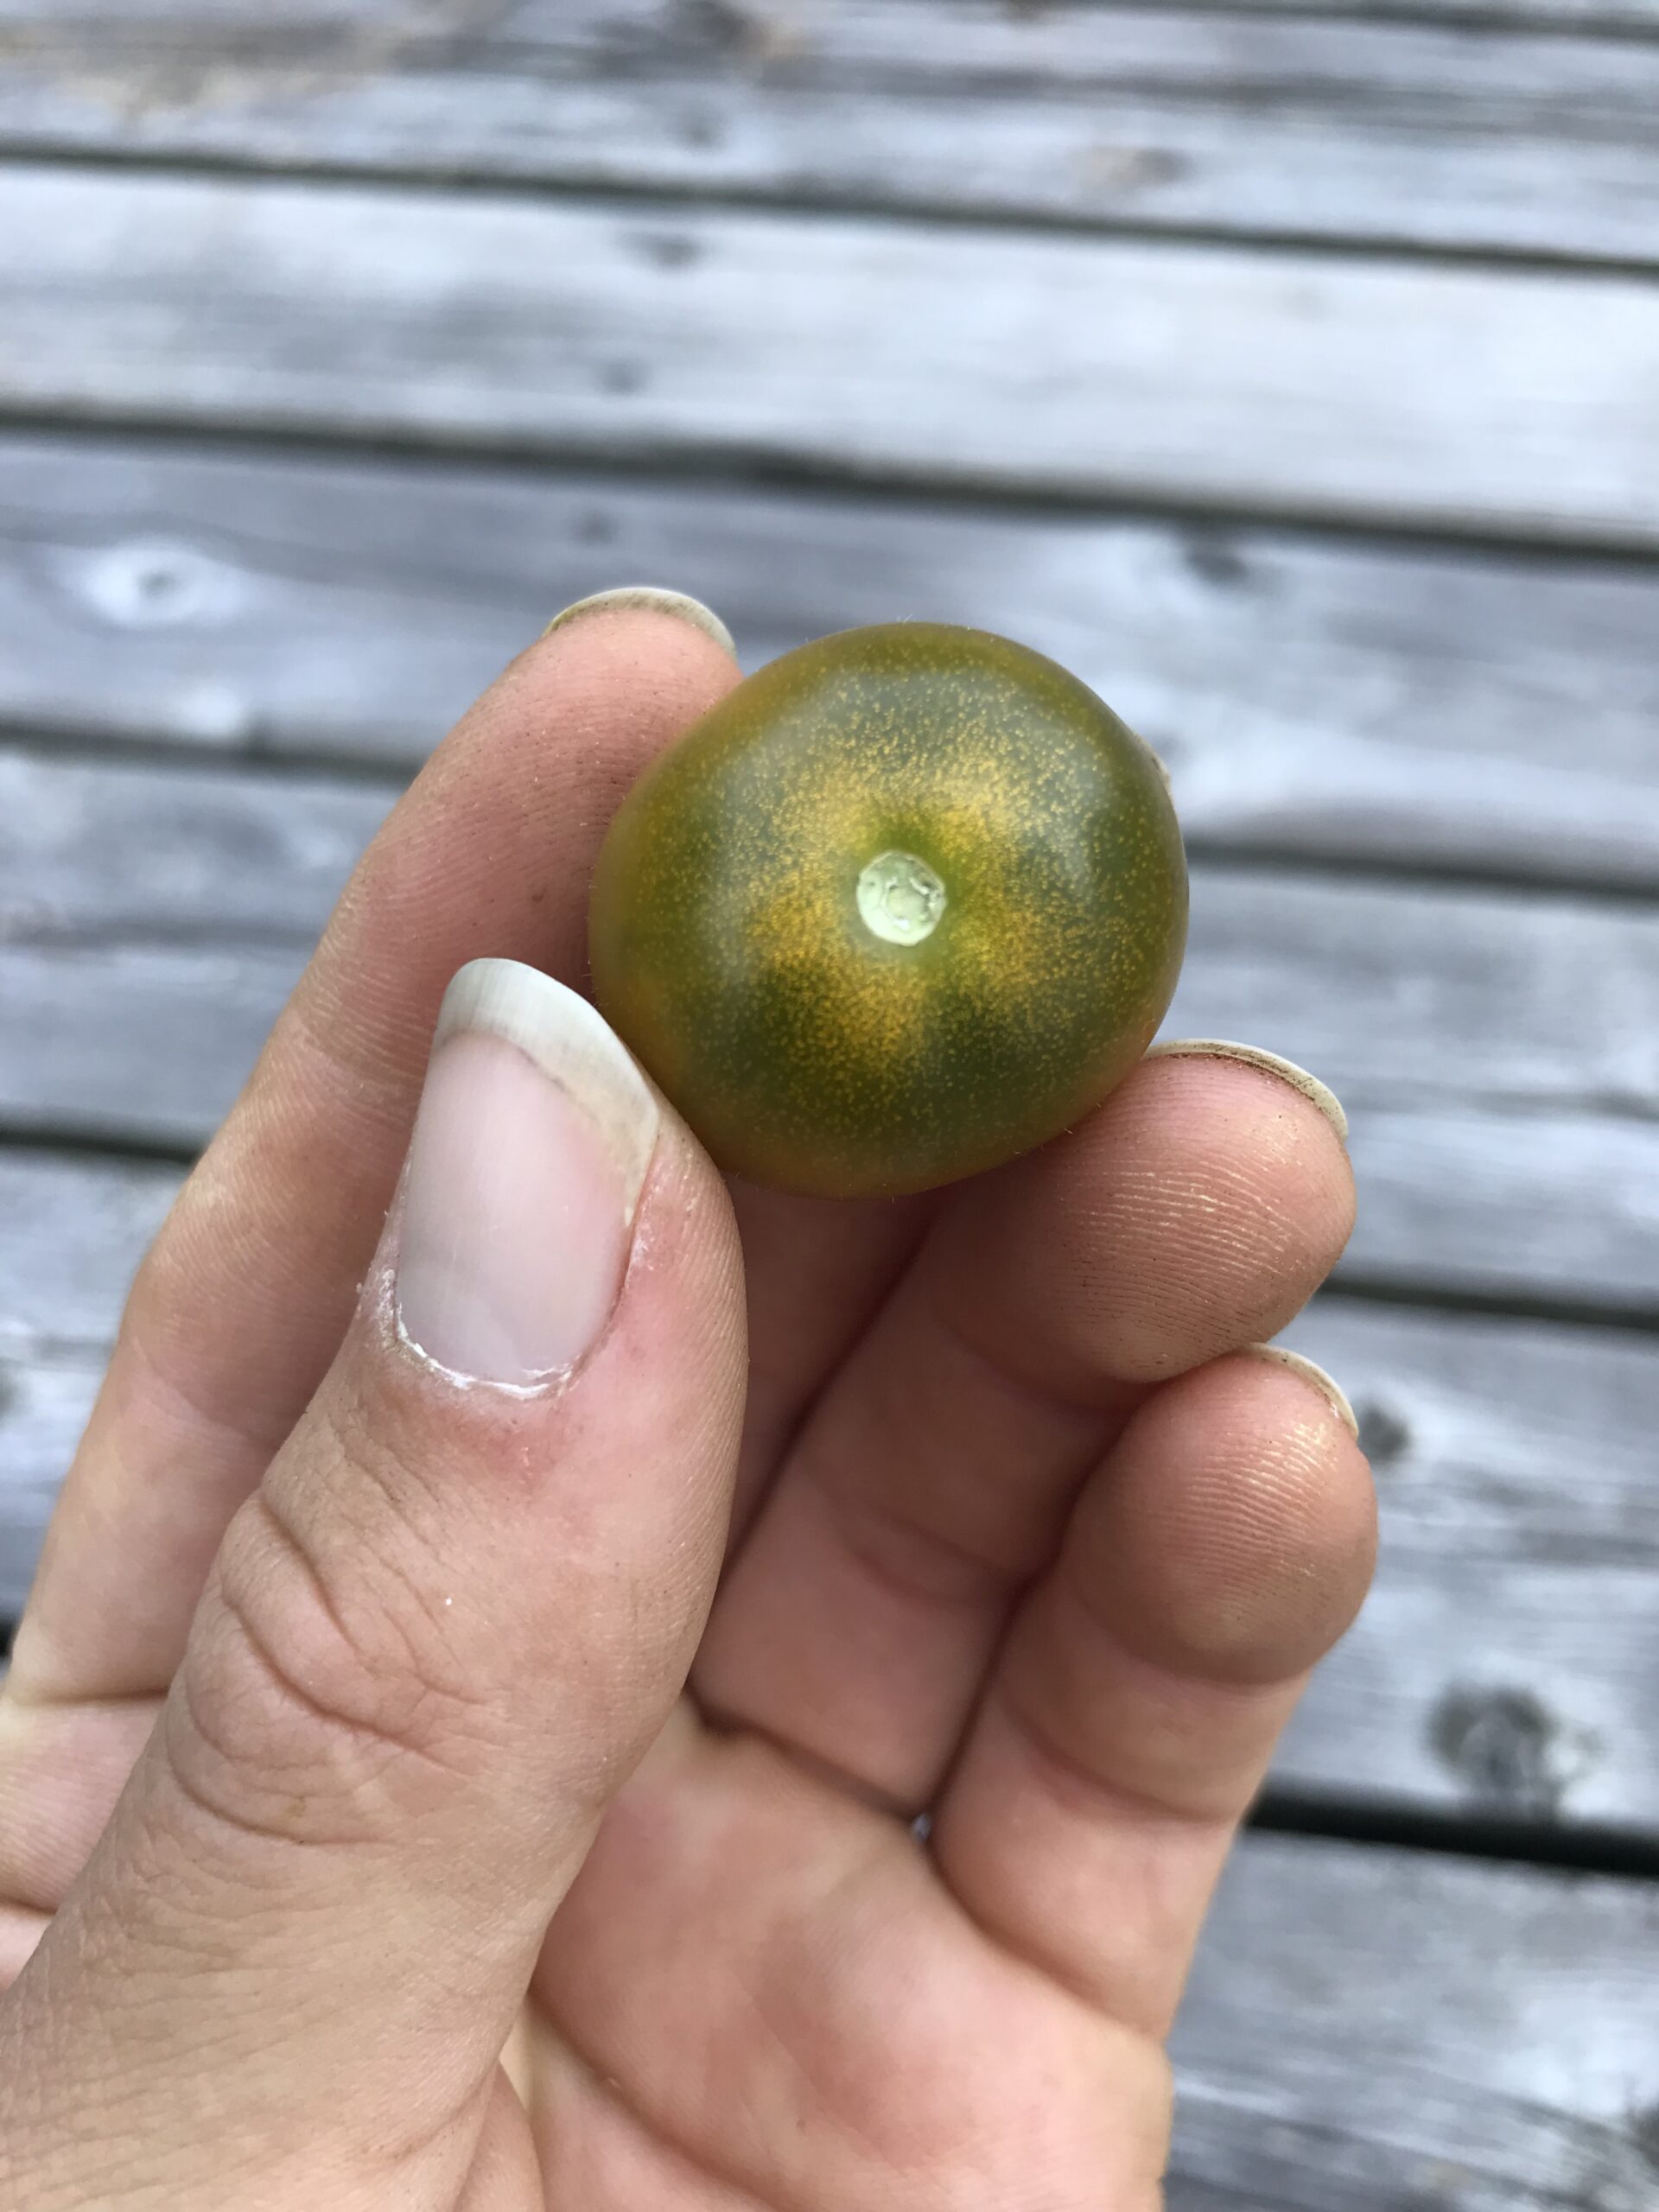 Sweet Baby Jade Cherry Tomato Seeds